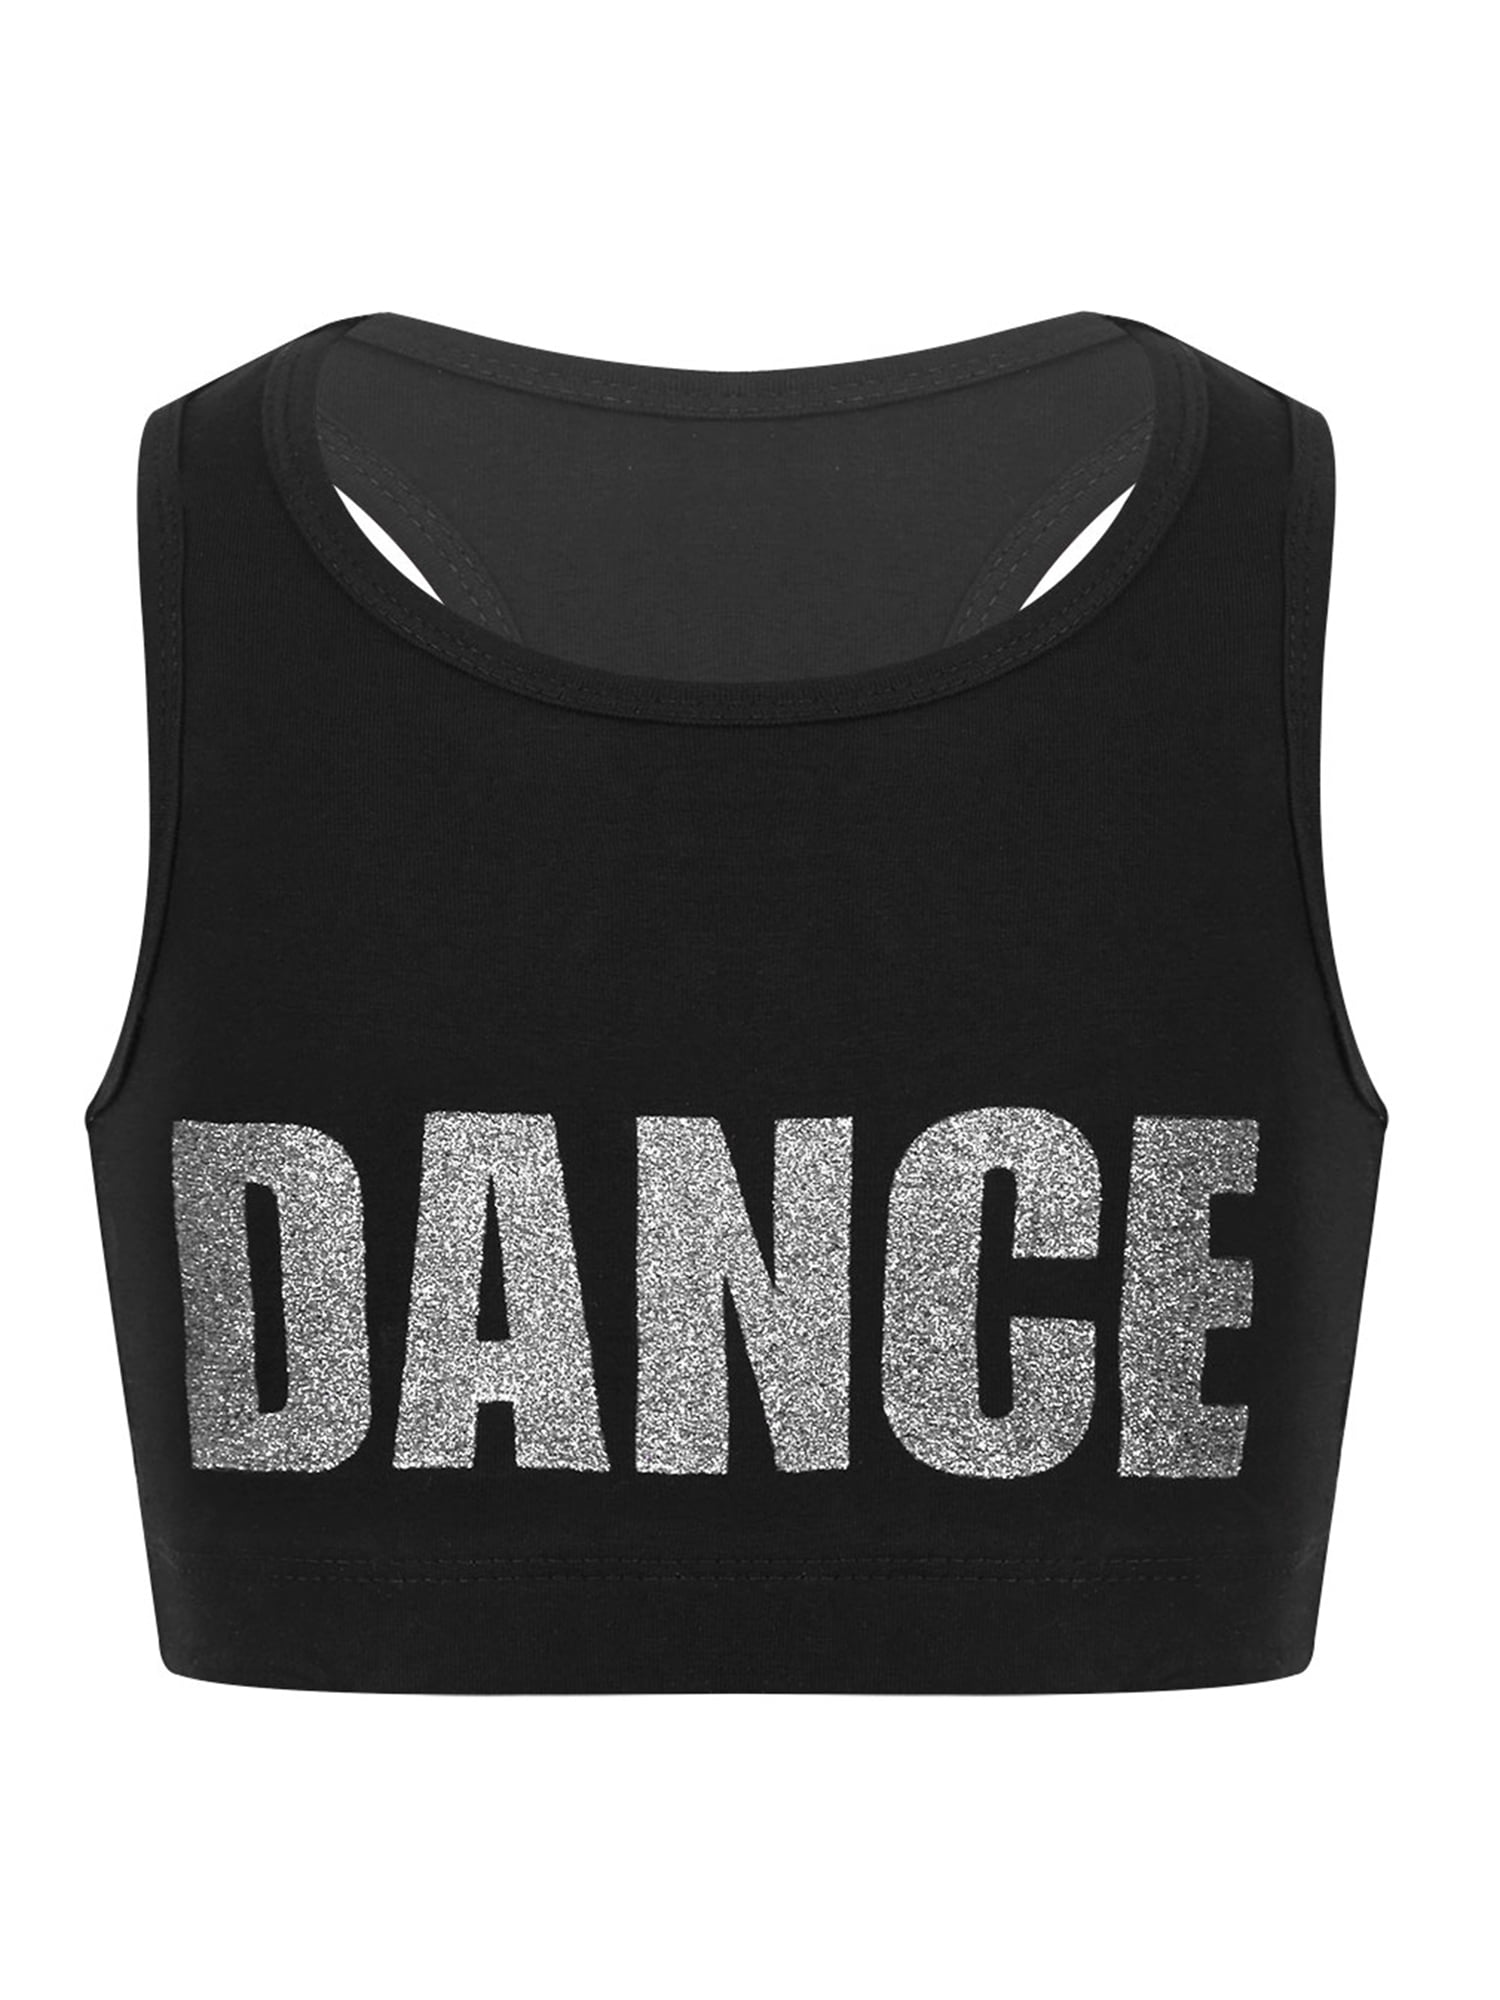 Girls Dance Bra Crop Top Kids Gymnastics Workout Sports Vest Tank Tops Dancewear 